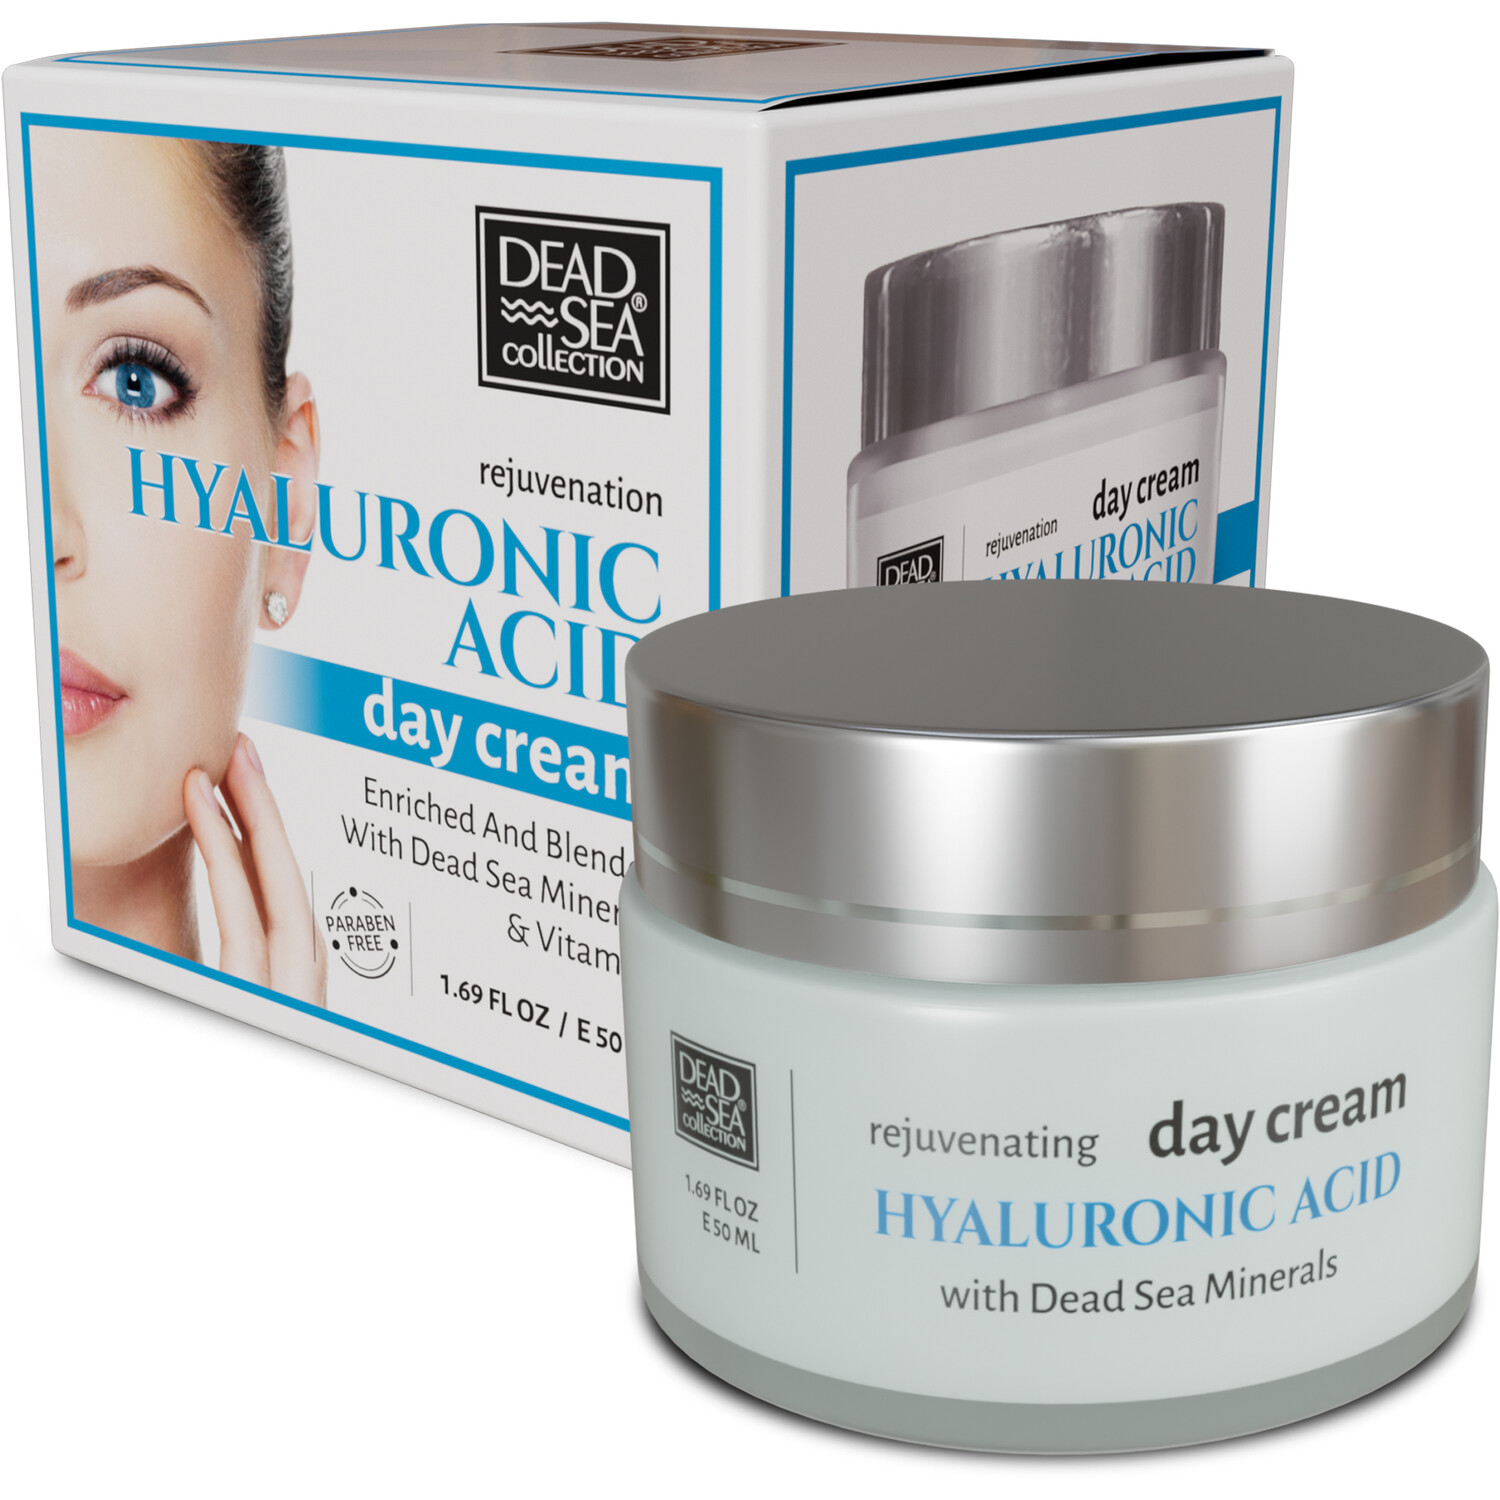 Dead Sea Collection Hyaluronic Acid Rejuvenation Day Cream - White Image